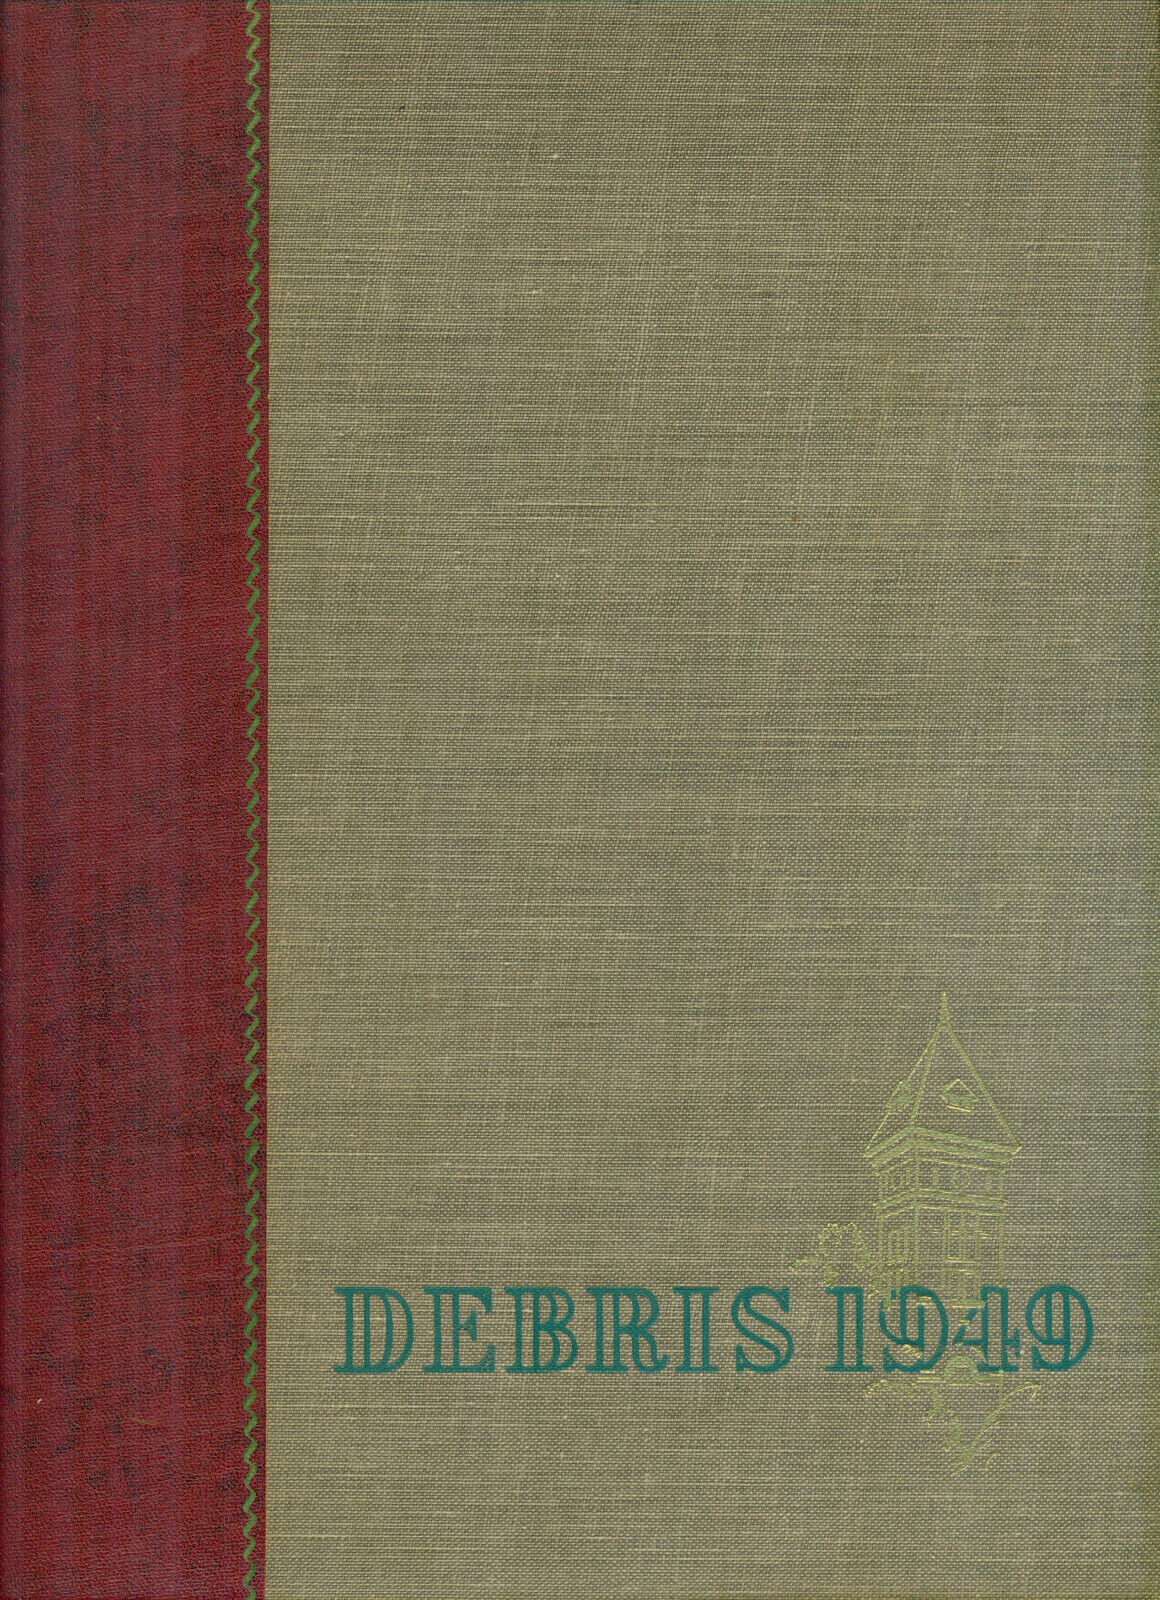 Debris 1949 -- Purdue University yearbook